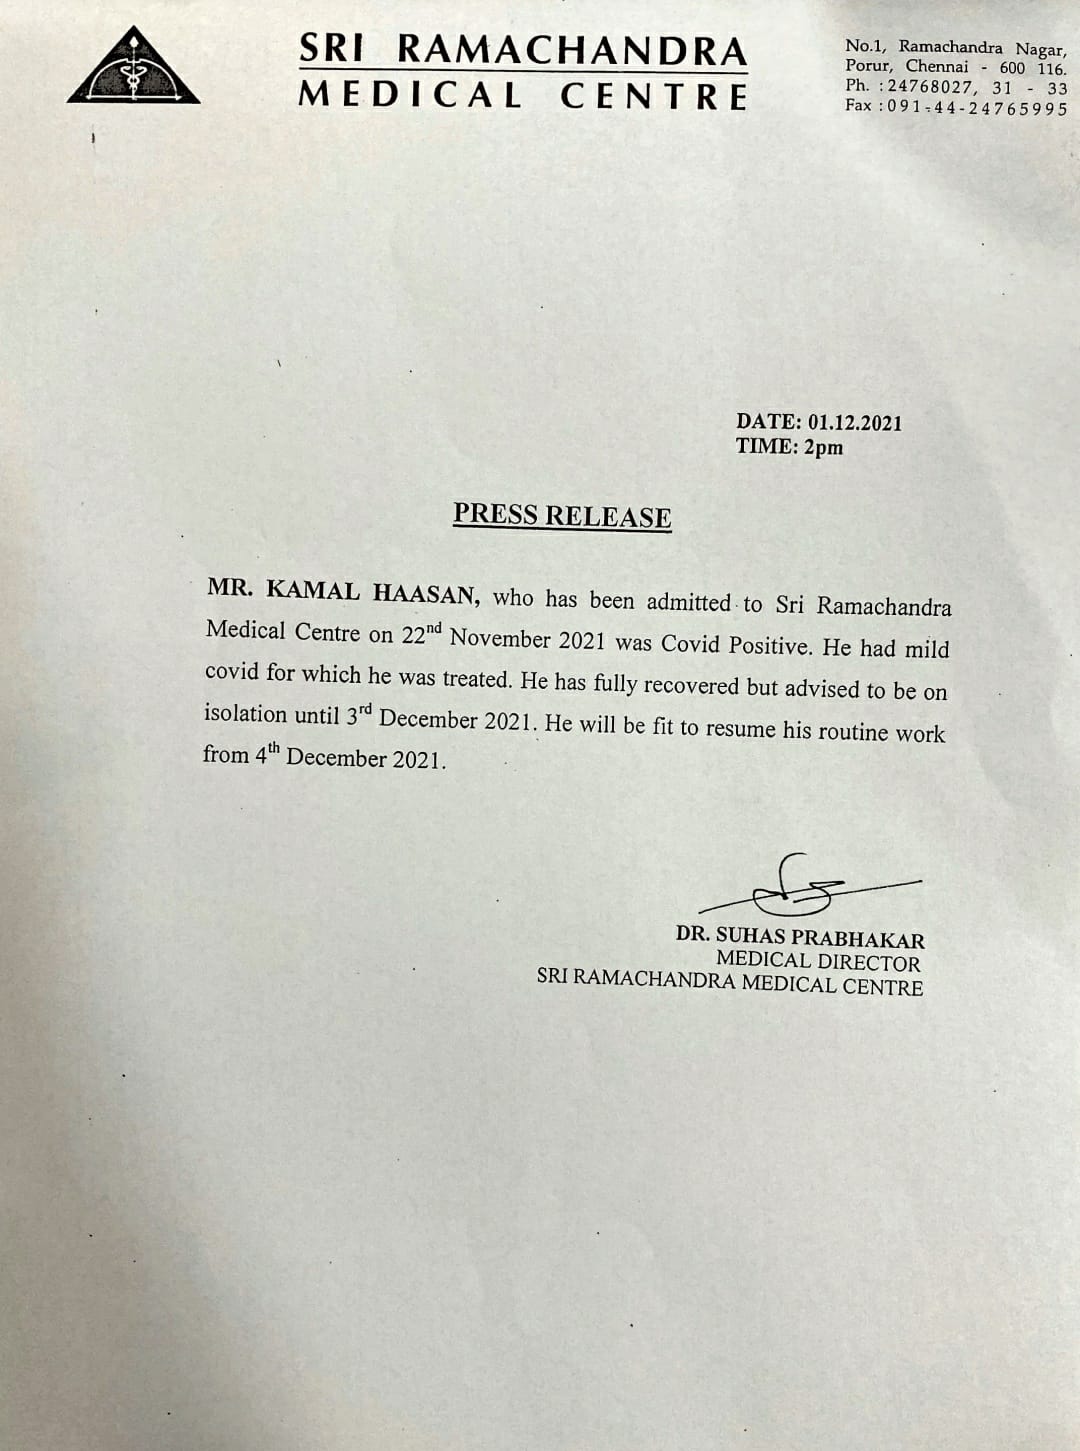 kamal haasan health condition Hospital press release